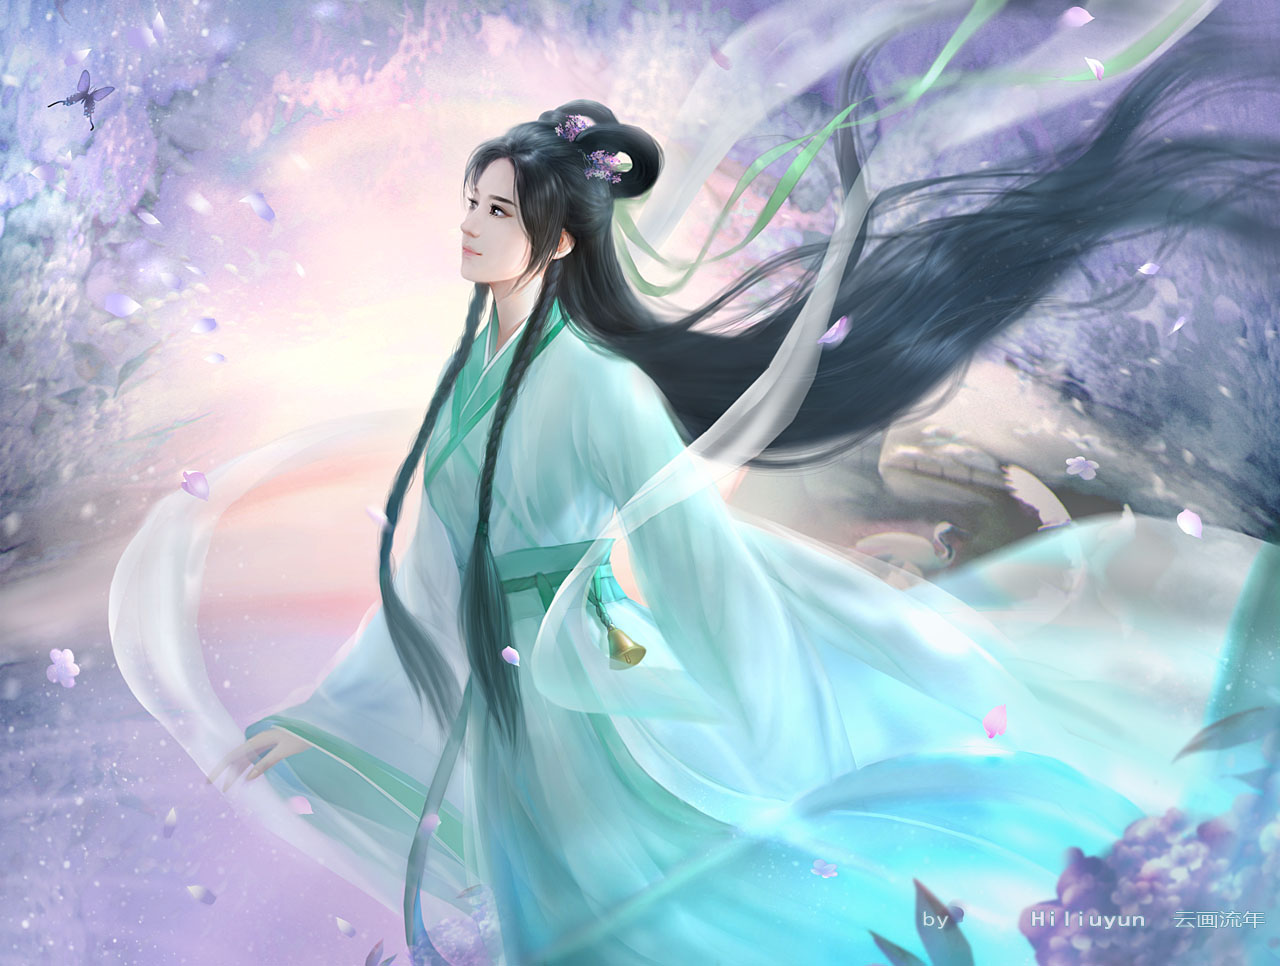 WuXia Digital Art CG Original Characters Fantasy Girl HiLiuyun 1280x966